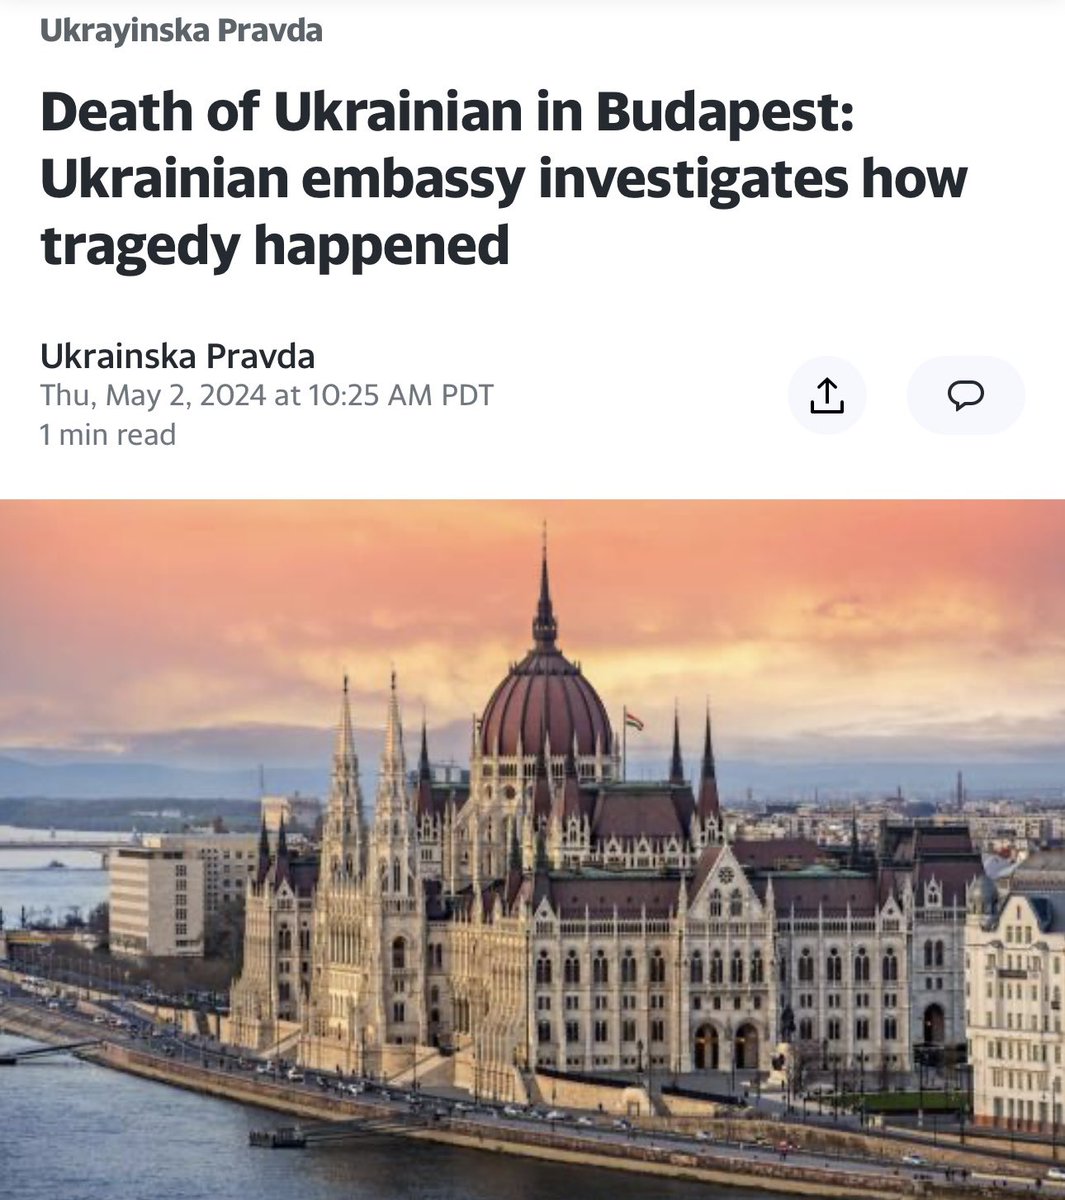 𝗦𝗽𝗿𝗲𝗮𝗱 𝗼𝗳 𝗥𝘂𝘀𝘀𝗸𝗶𝘆 𝗠𝗶𝗿 𝗜𝗱𝗲𝗼𝗹𝗼𝗴𝘆 𝗼𝗳 𝗛𝗮𝘁𝗿𝗲𝗱 𝗮𝗻𝗱 𝗠𝘂𝗿𝗱𝗲𝗿 𝗦𝗽𝗮𝗿𝗸𝘀 𝗧𝗿𝗮𝗴𝗶𝗰 𝗗𝗲𝗮𝘁𝗵𝘀 𝗼𝗳 𝗨𝗸𝗿𝗮𝗶𝗻𝗶𝗮𝗻𝘀 𝗔𝗯𝗿𝗼𝗮𝗱 [Source: Ukrainian Embassy and European Pravda] - Russkiy Mir ideology, fueled by hatred and destruction,…